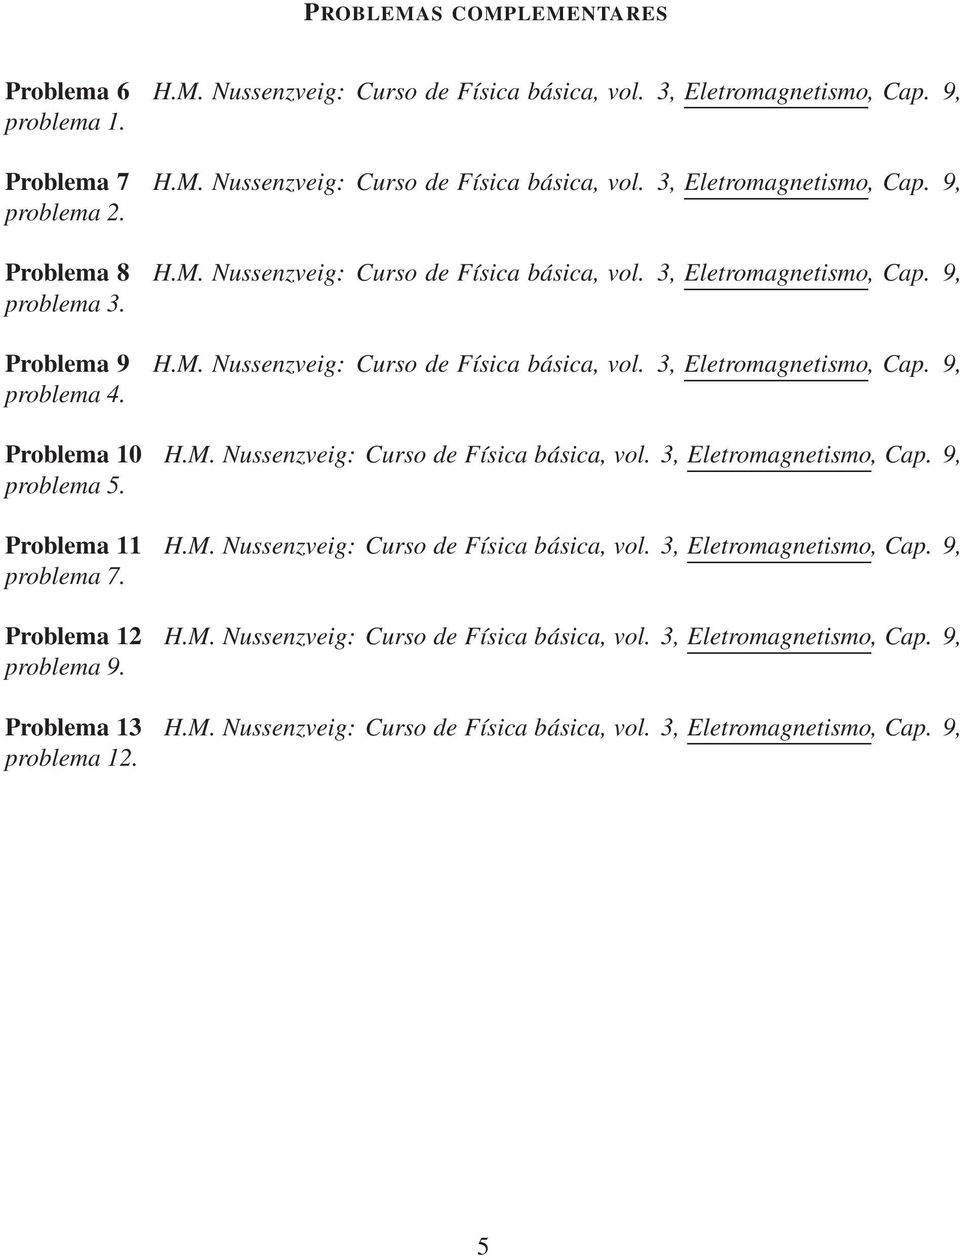 Problema 10 H.M. Nussenzveig: Curso de Física básica, vol. 3, Eletromagnetismo, Cap. 9, problema 5. Problema 11 H.M. Nussenzveig: Curso de Física básica, vol. 3, Eletromagnetismo, Cap. 9, problema 7.